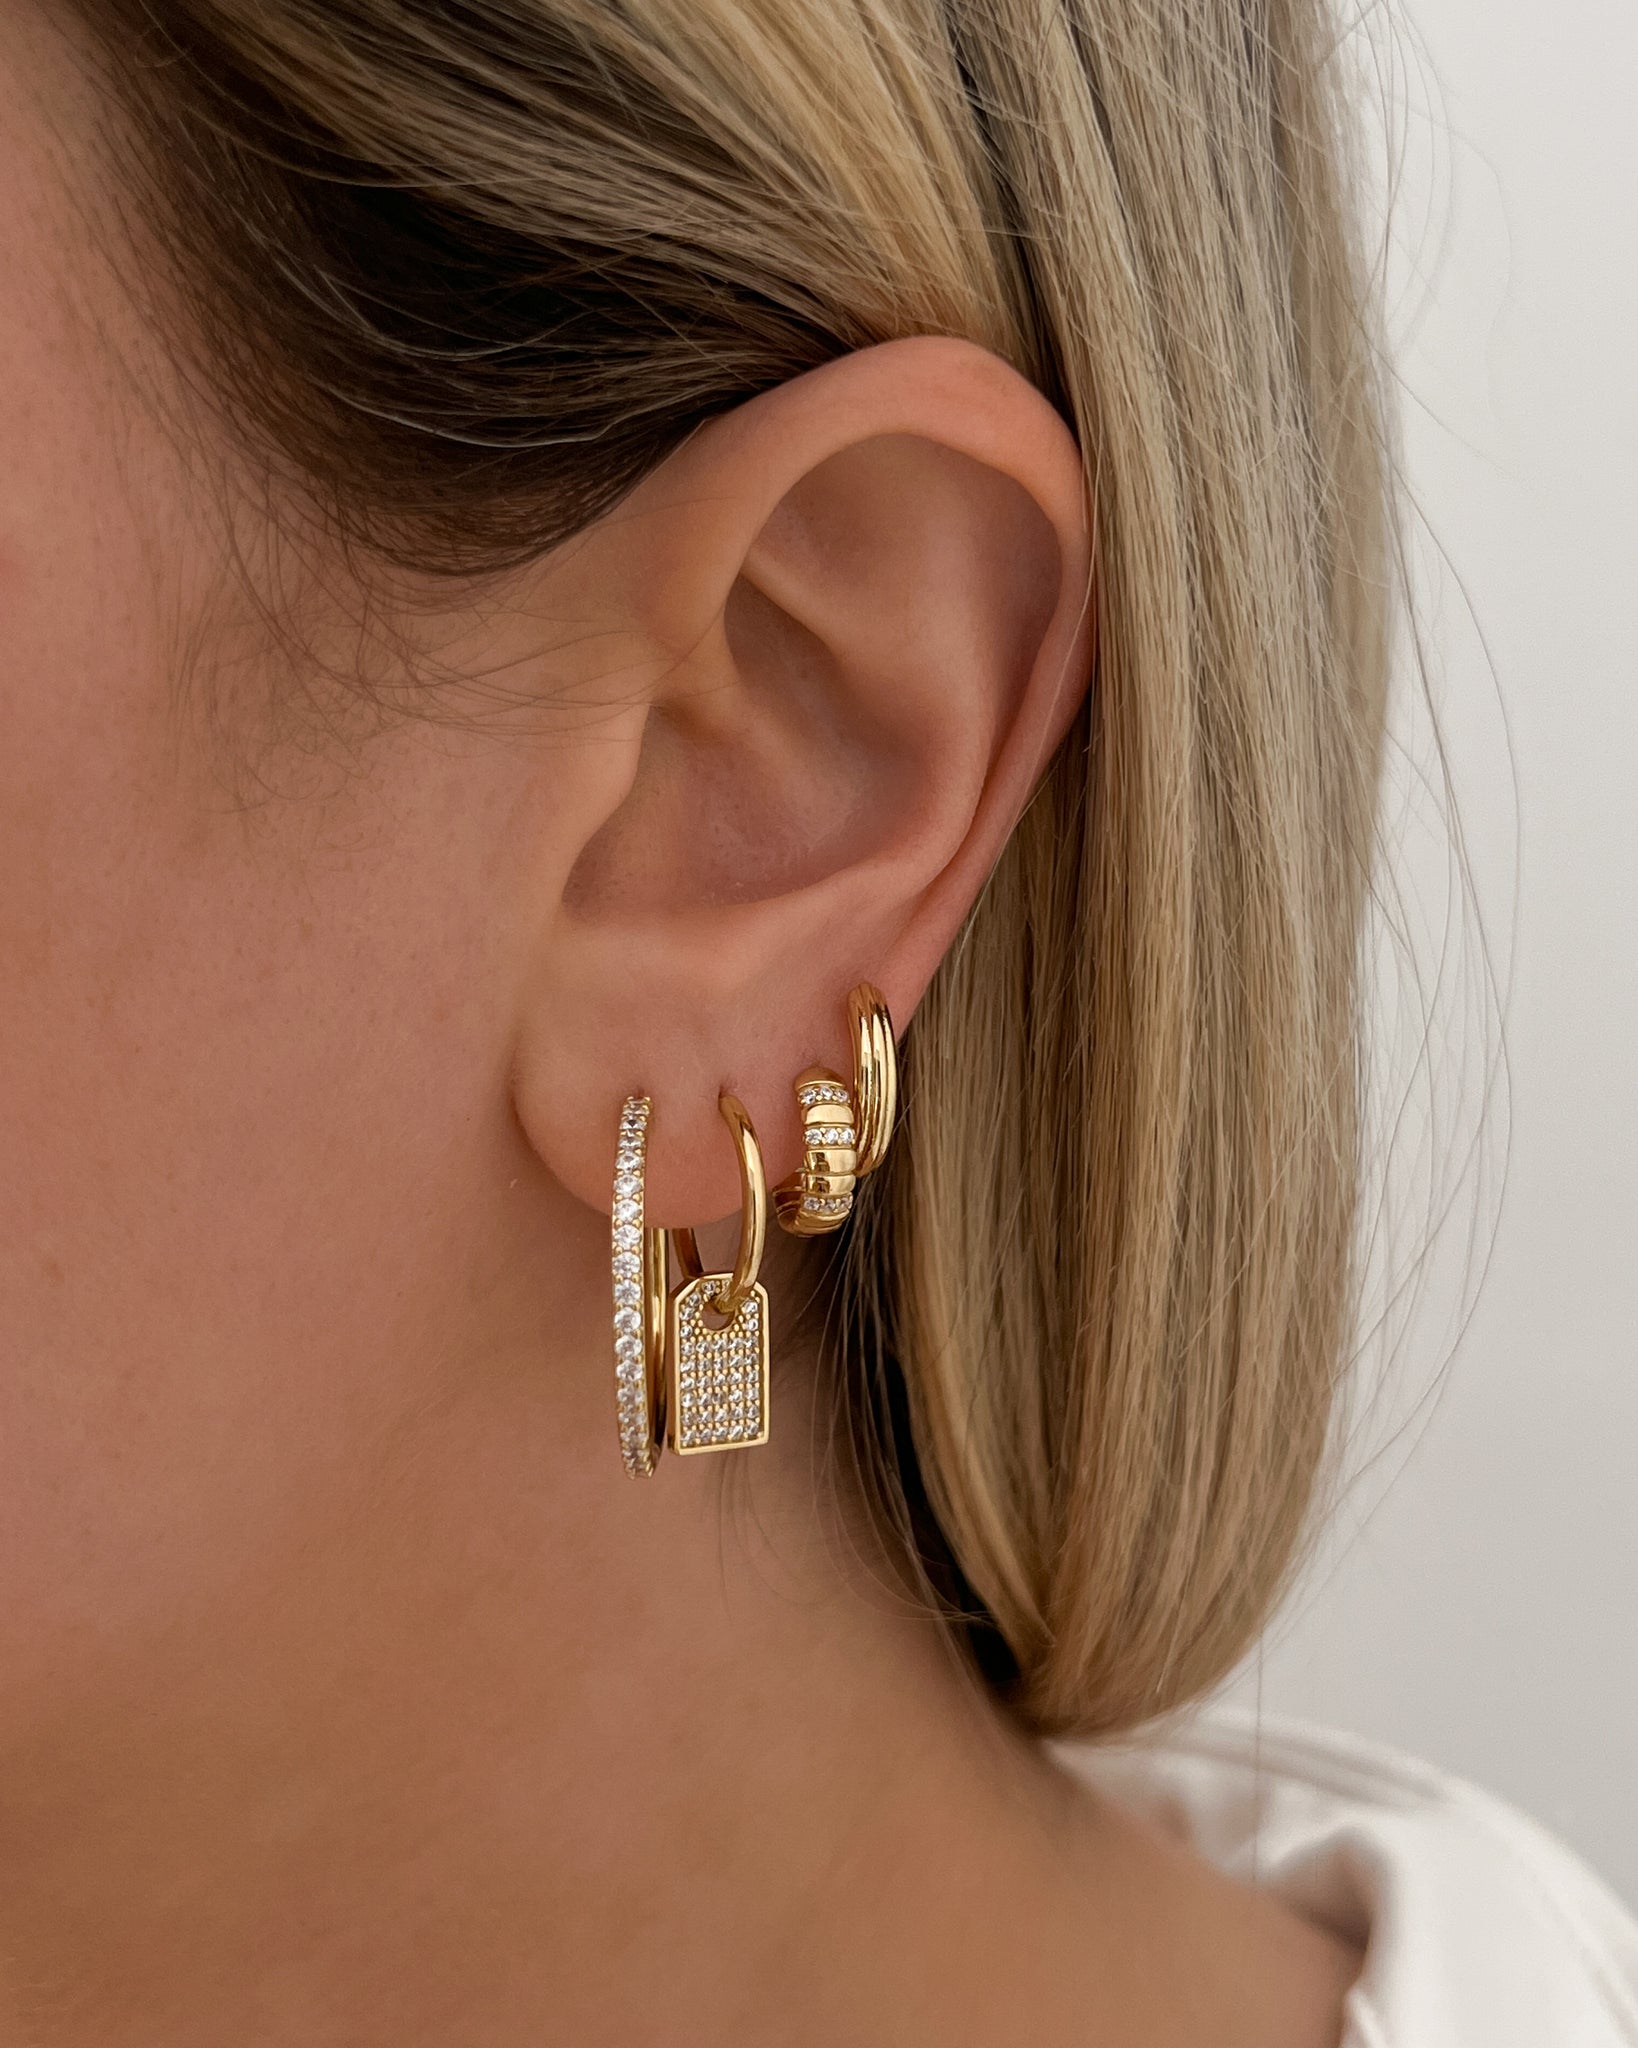 Mary Jane earrings